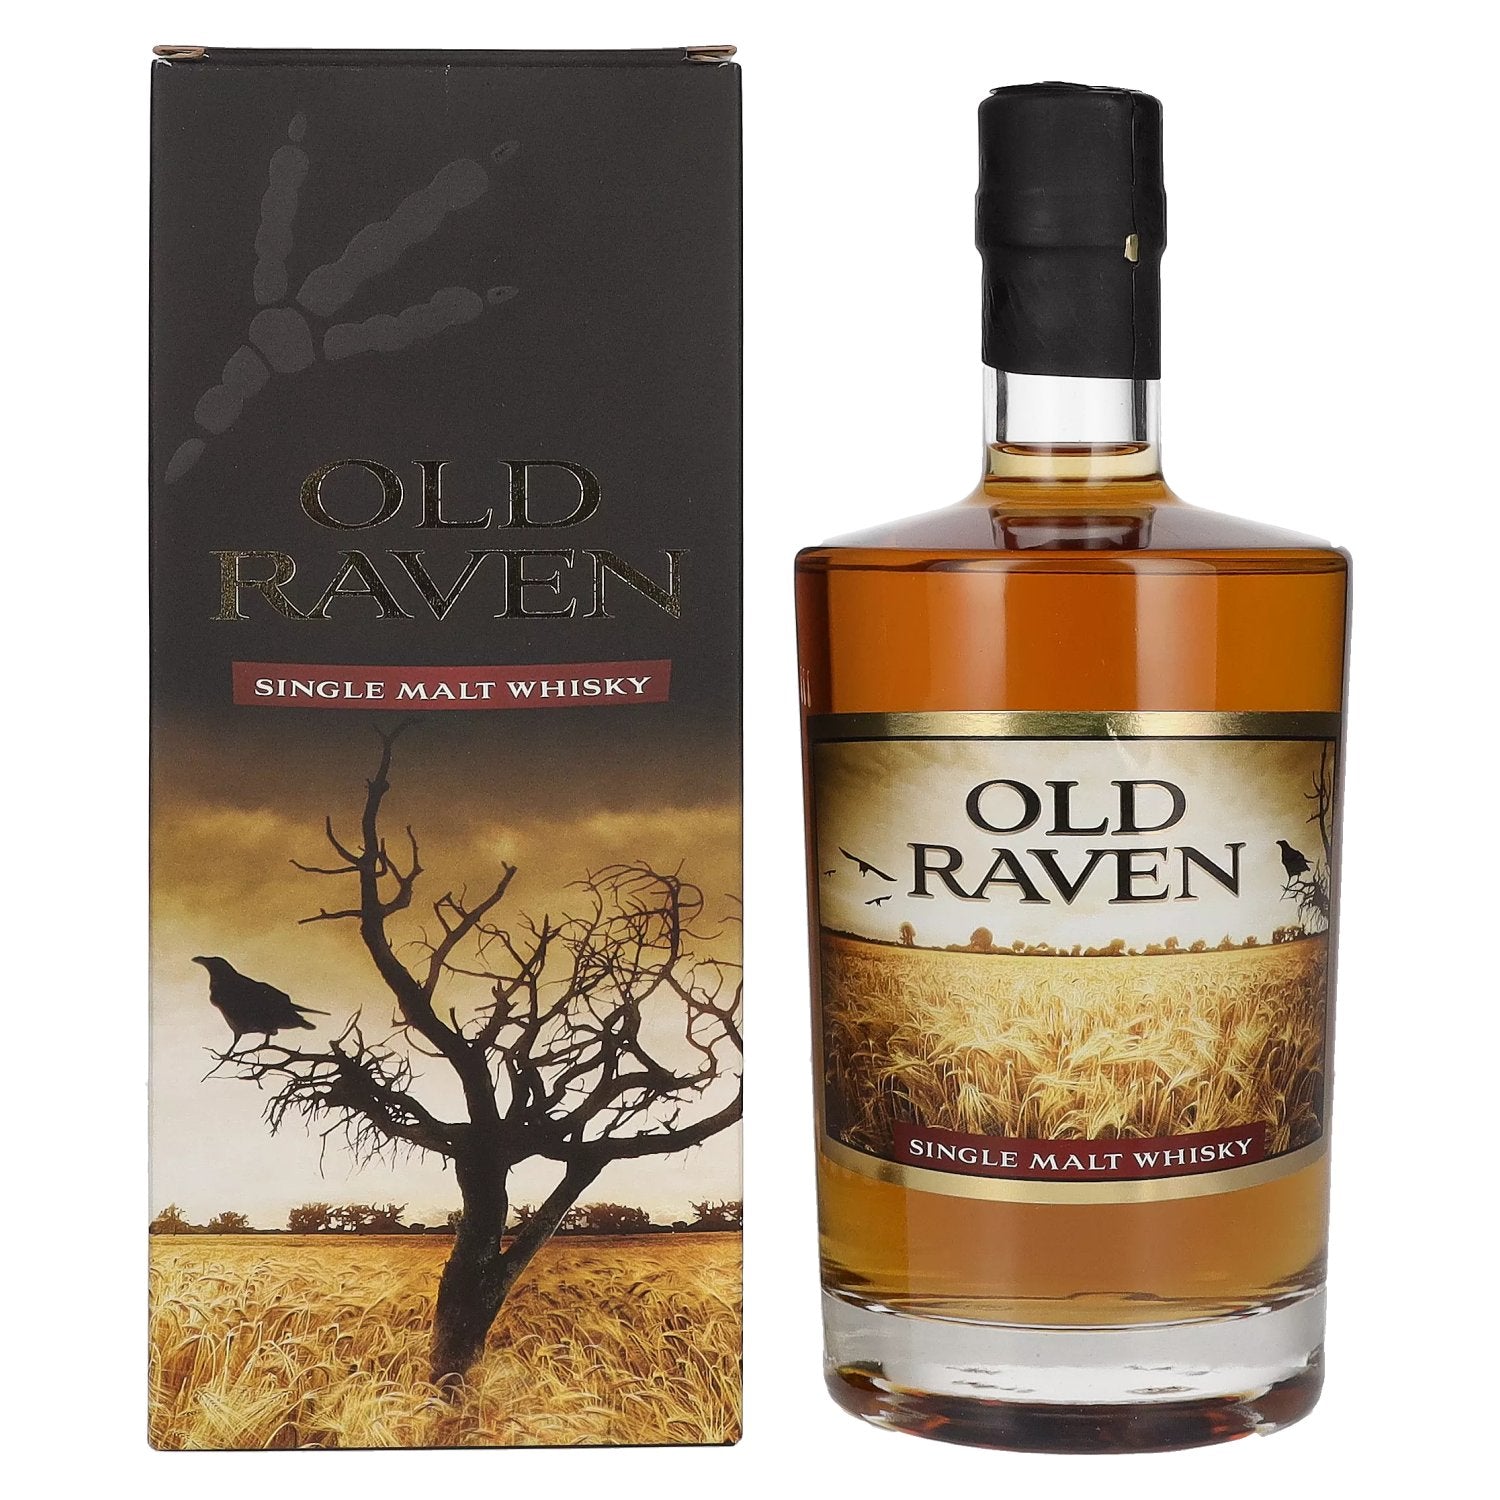 Old Raven Triple Distilled Single Malt Whisky SMOKY 41% Vol. 0,5l in Giftbox